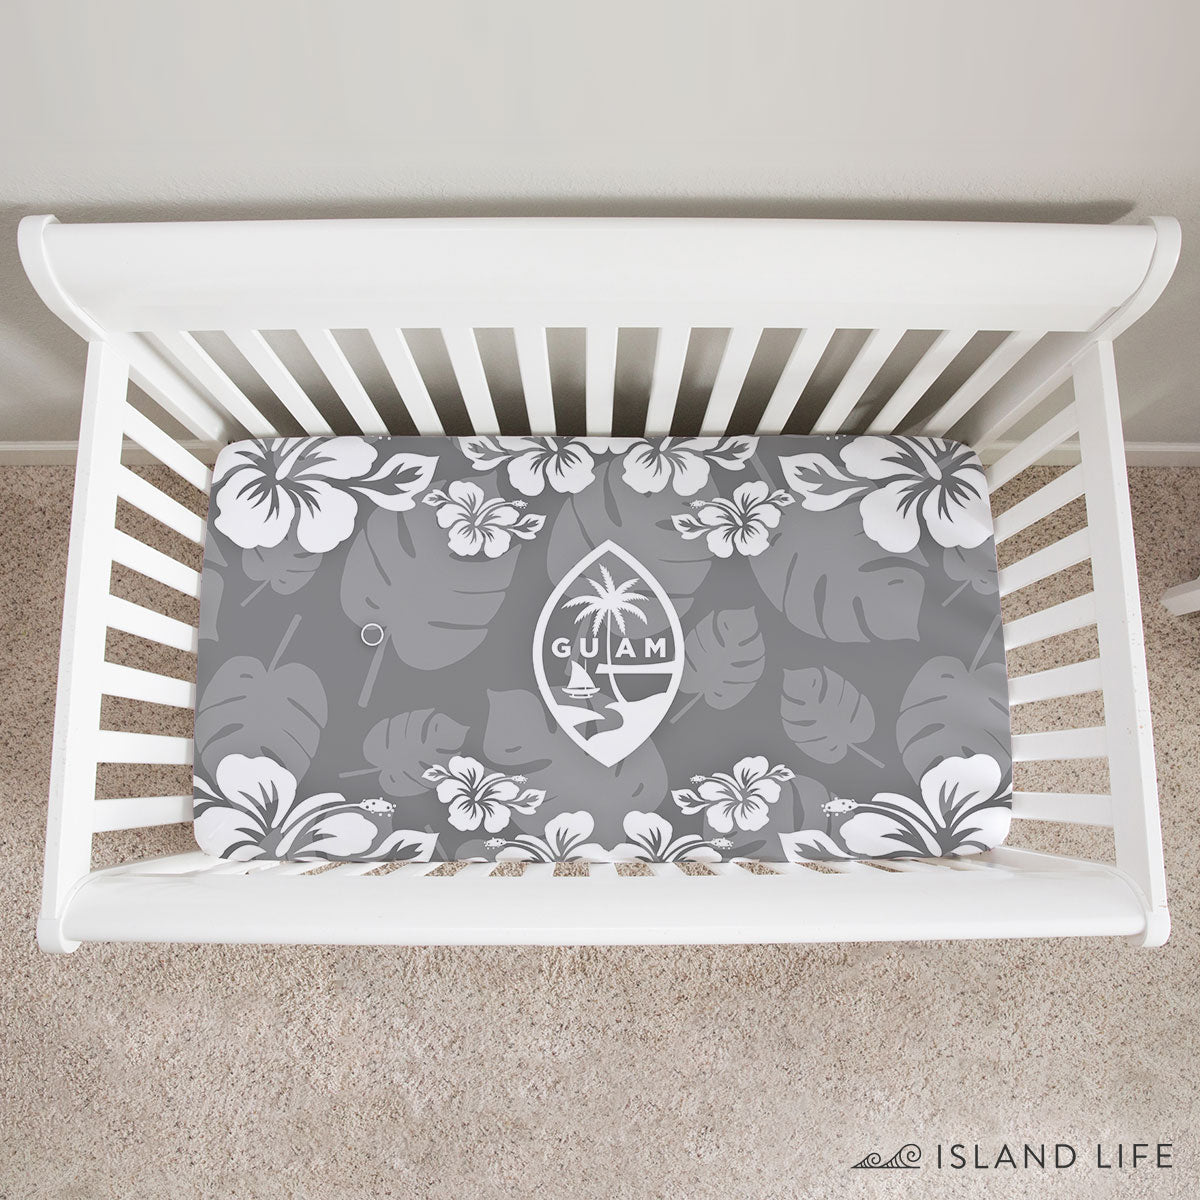 Guam Seal Gray Hibiscus Baby Crib Sheet